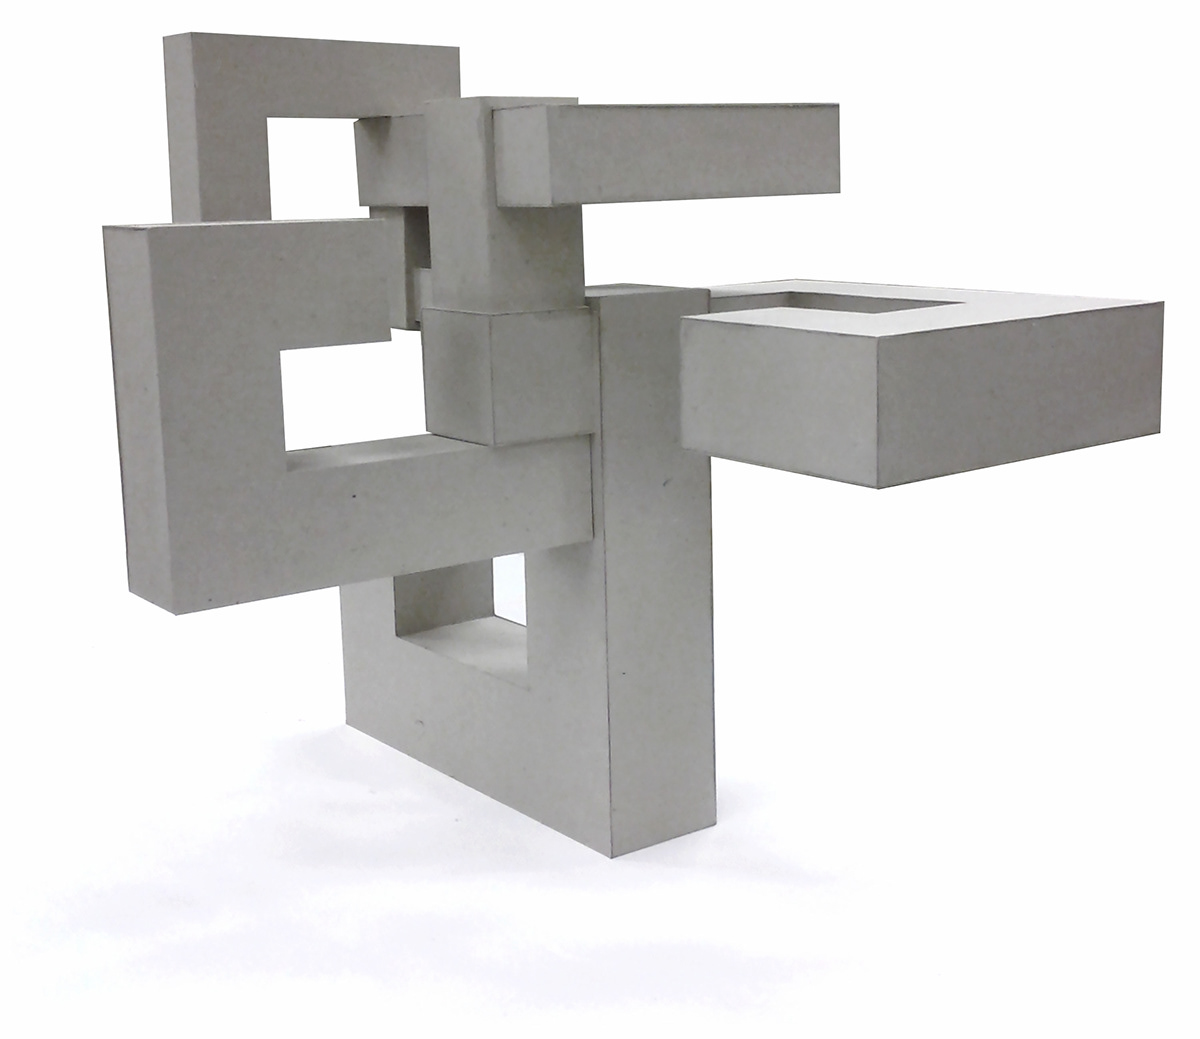 chipboard geometric nesting blocks sculpture